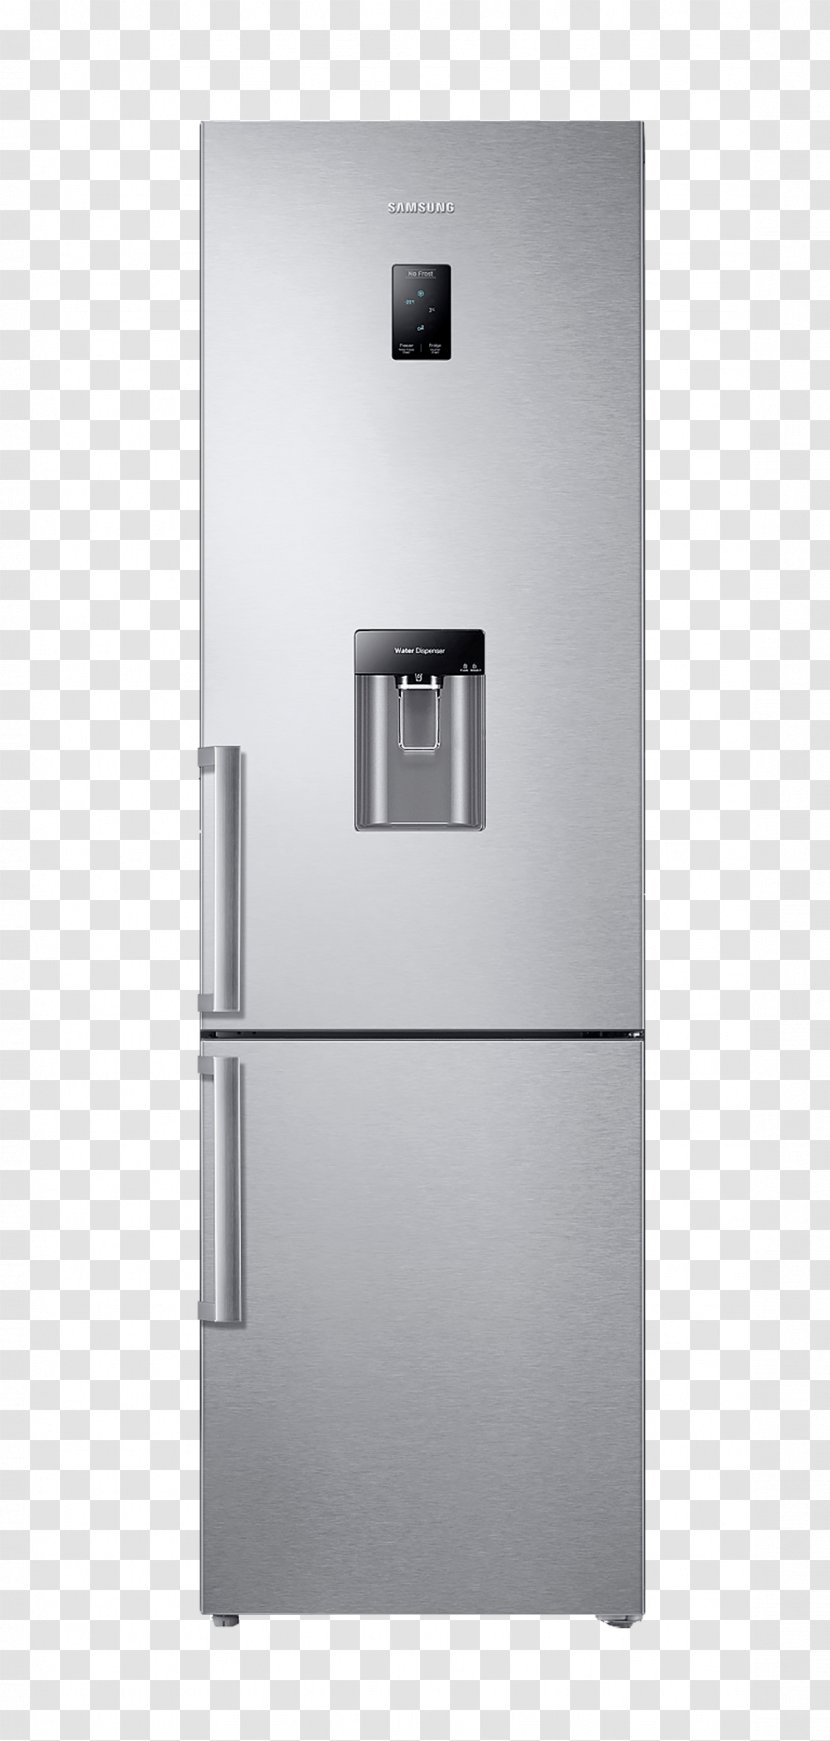 Samsung Galaxy S9 Refrigerator Freezers Auto-defrost - Consumer Electronics Transparent PNG